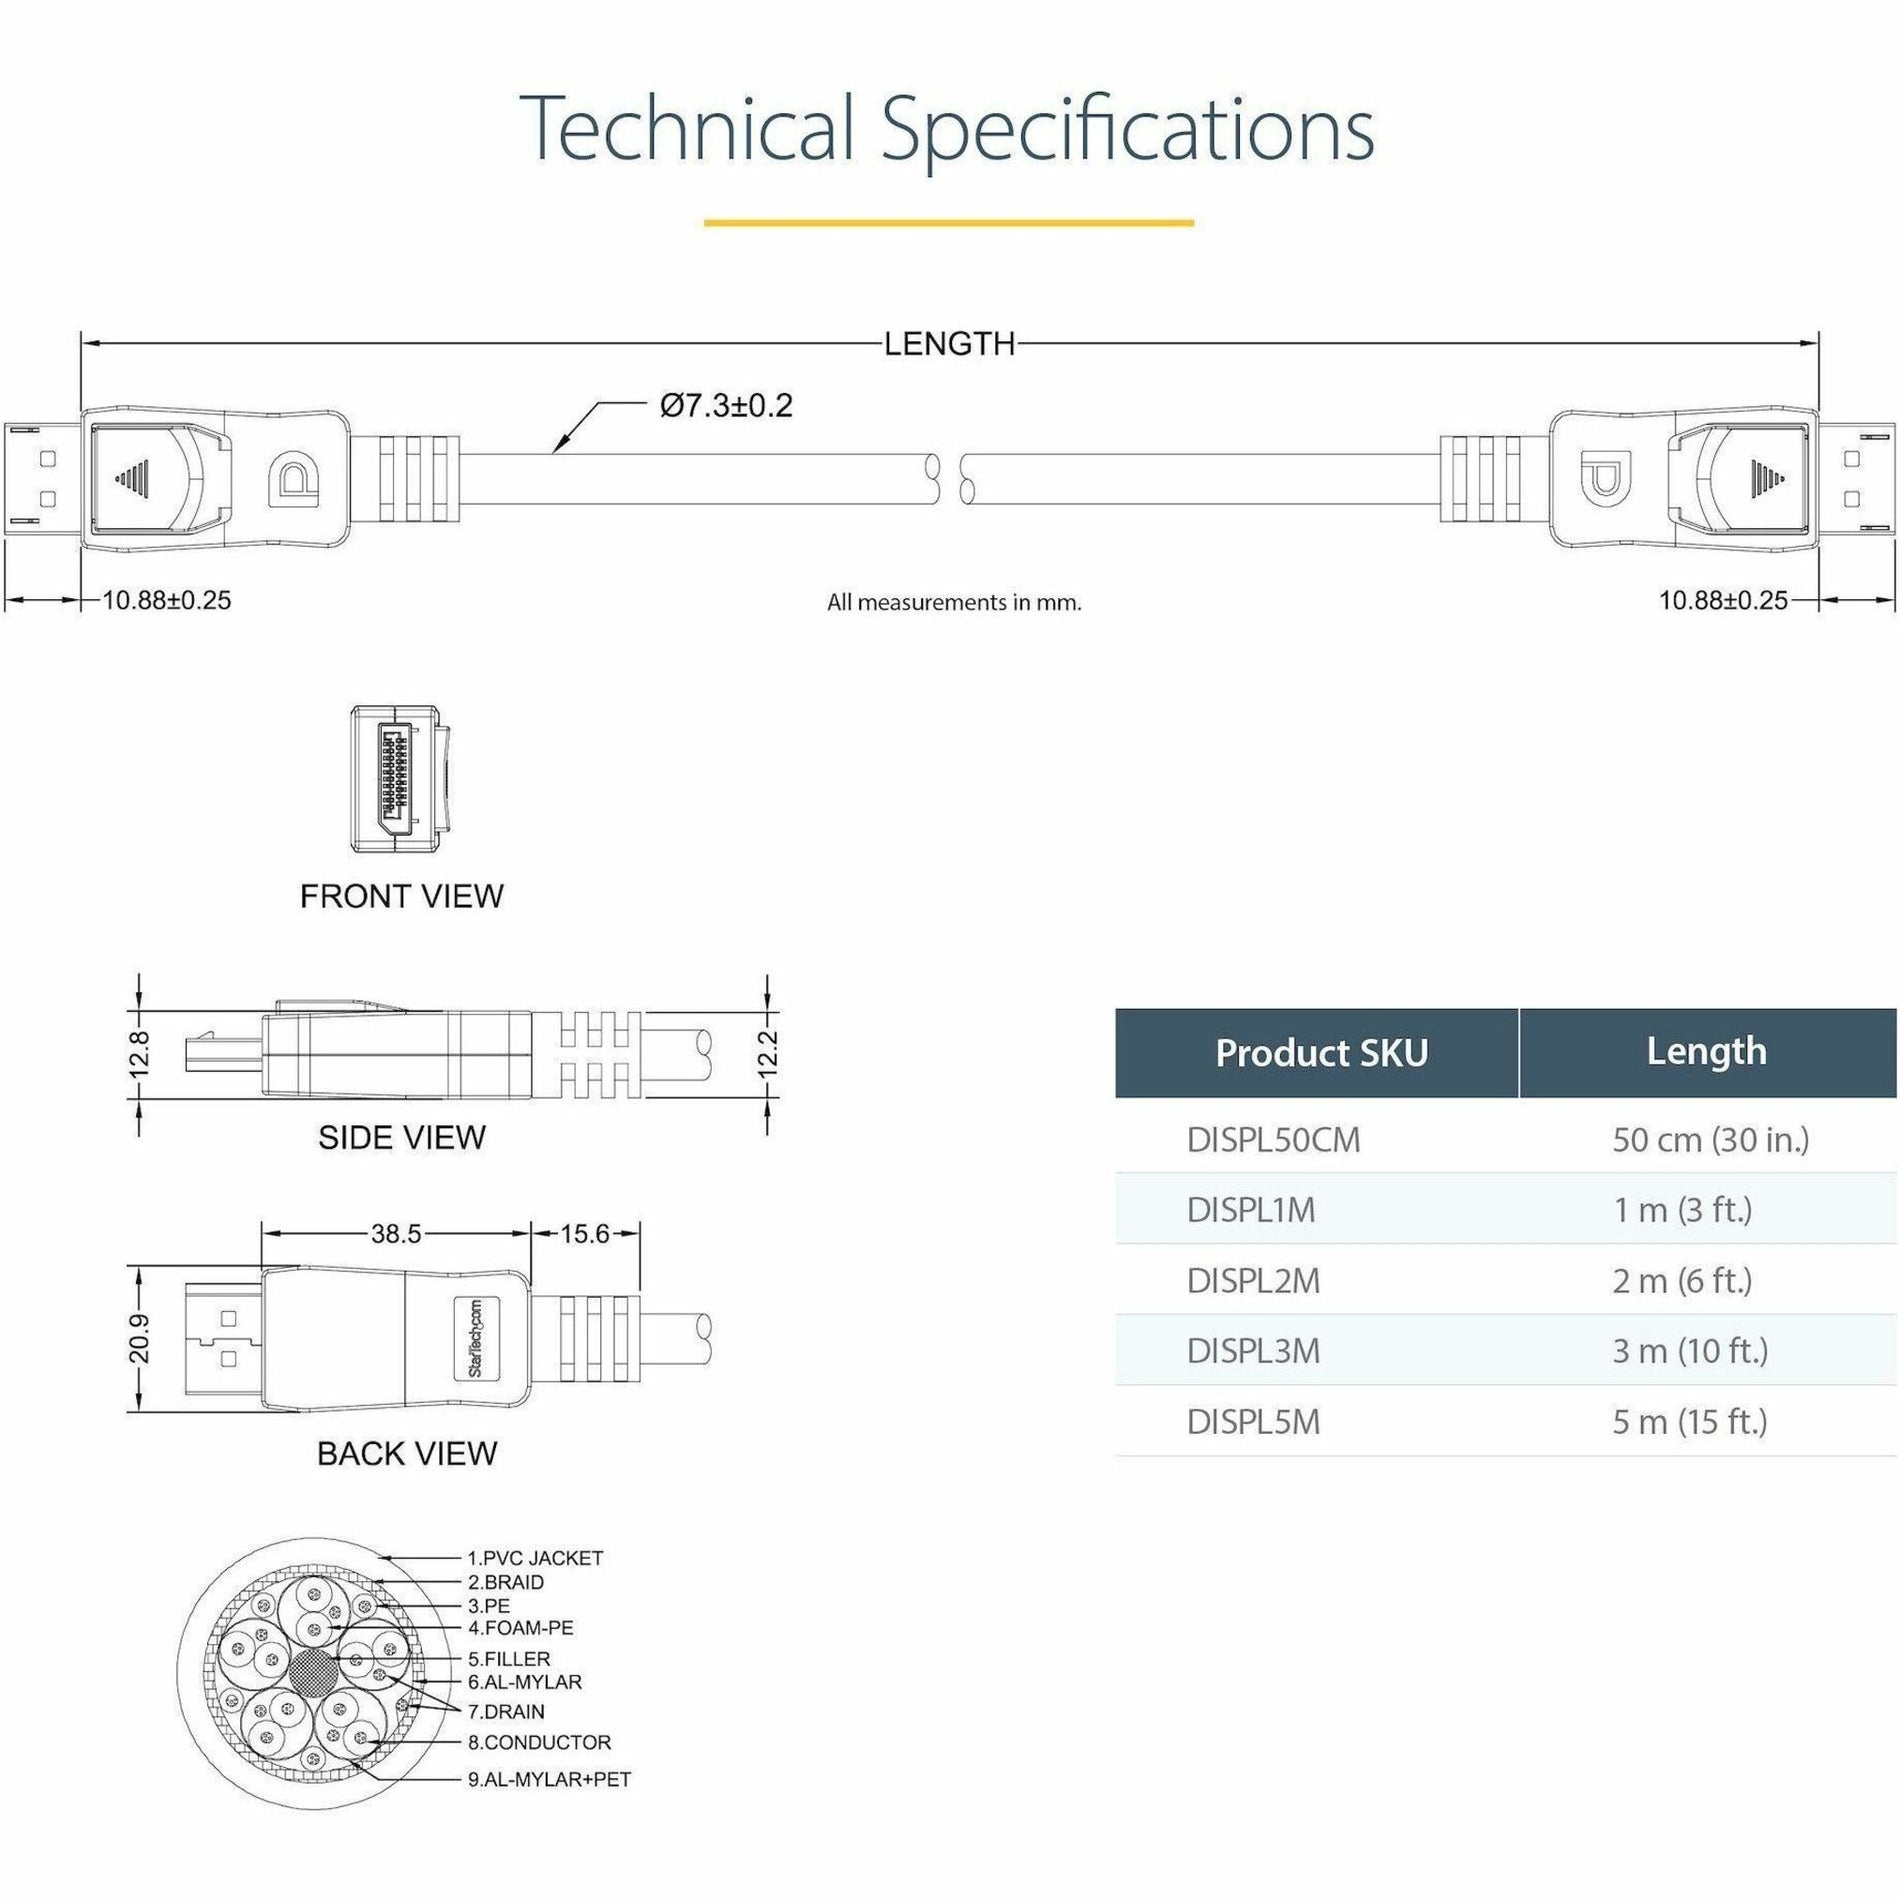 StarTech.com DISPL50CM 0.5m Short DisplayPort Cable with Latches - M/M, 4k Video Cable